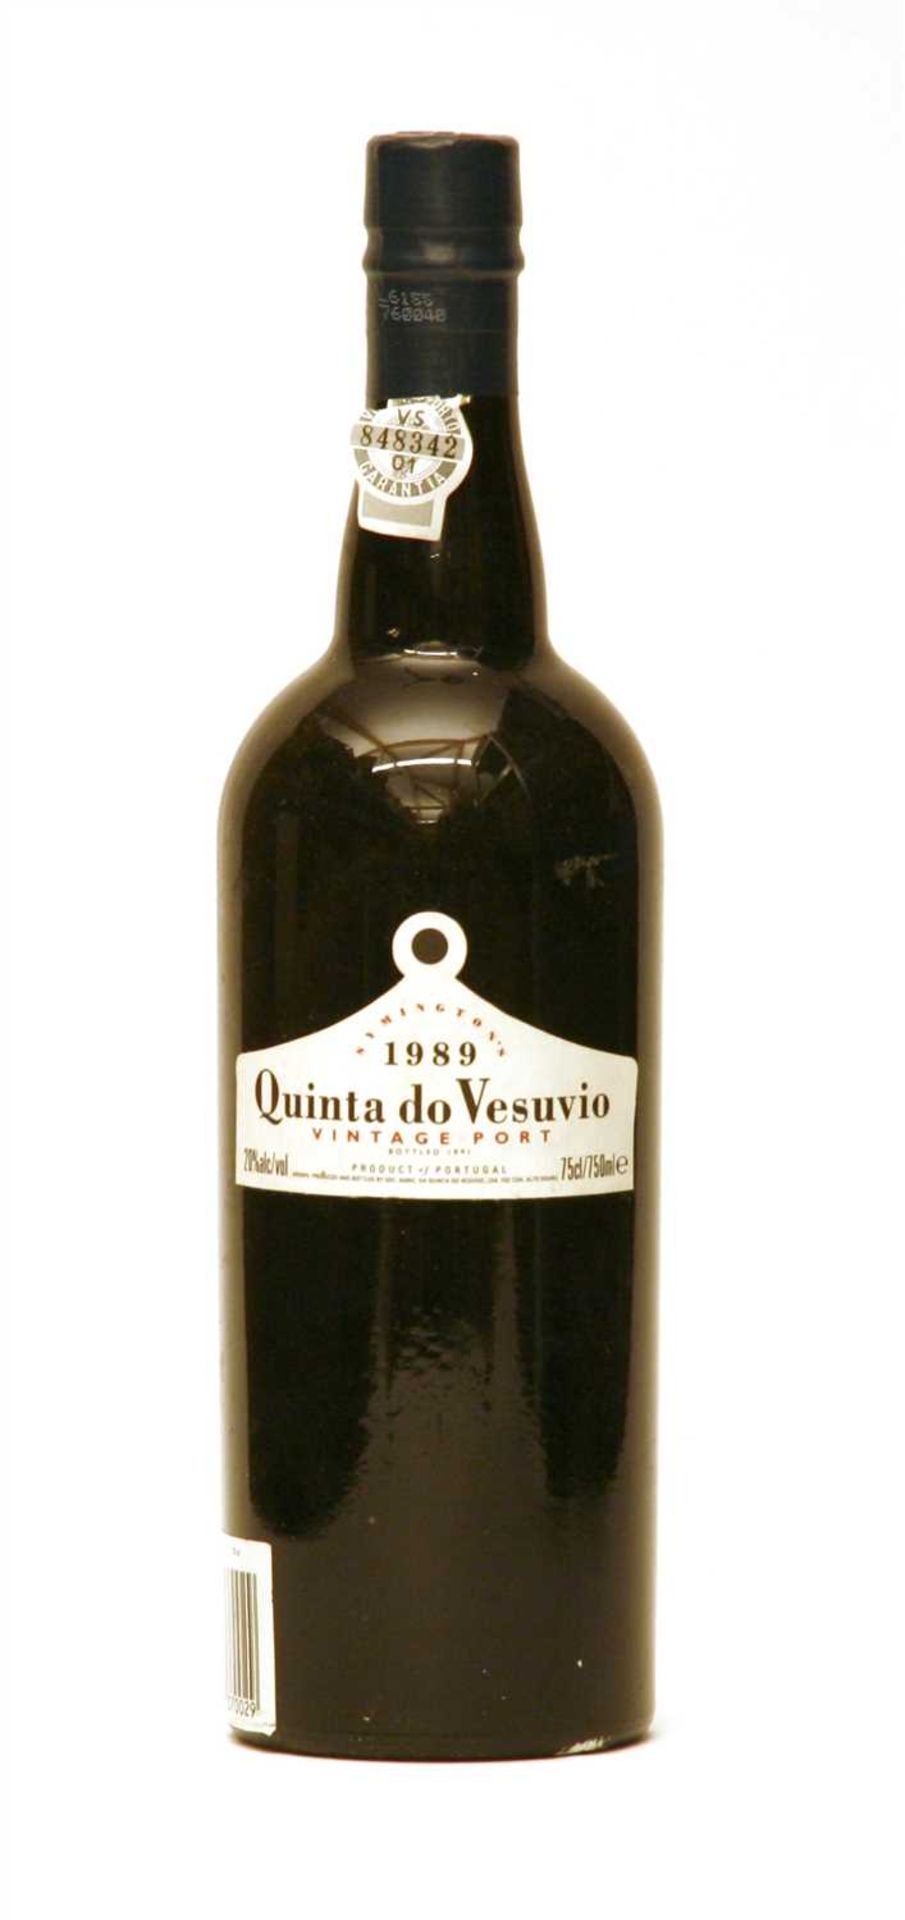 Symington's, Quinta do Vesuvio, 1989, one bottle